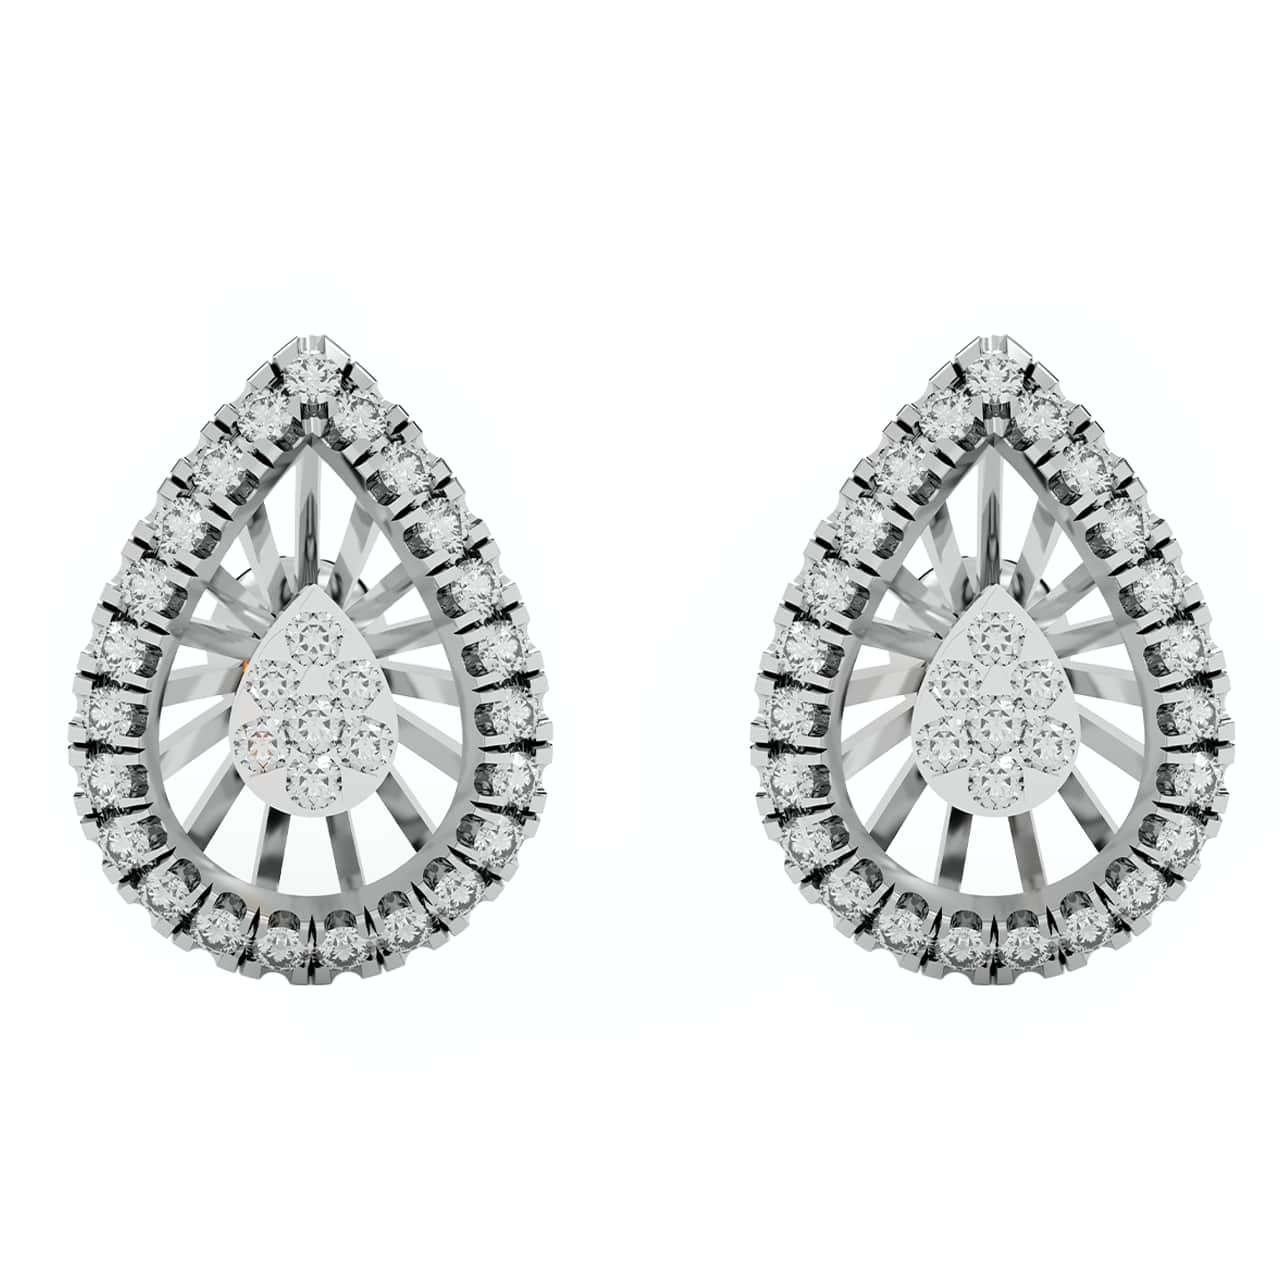 Nova Teardrop Design Diamond Stud Earrings